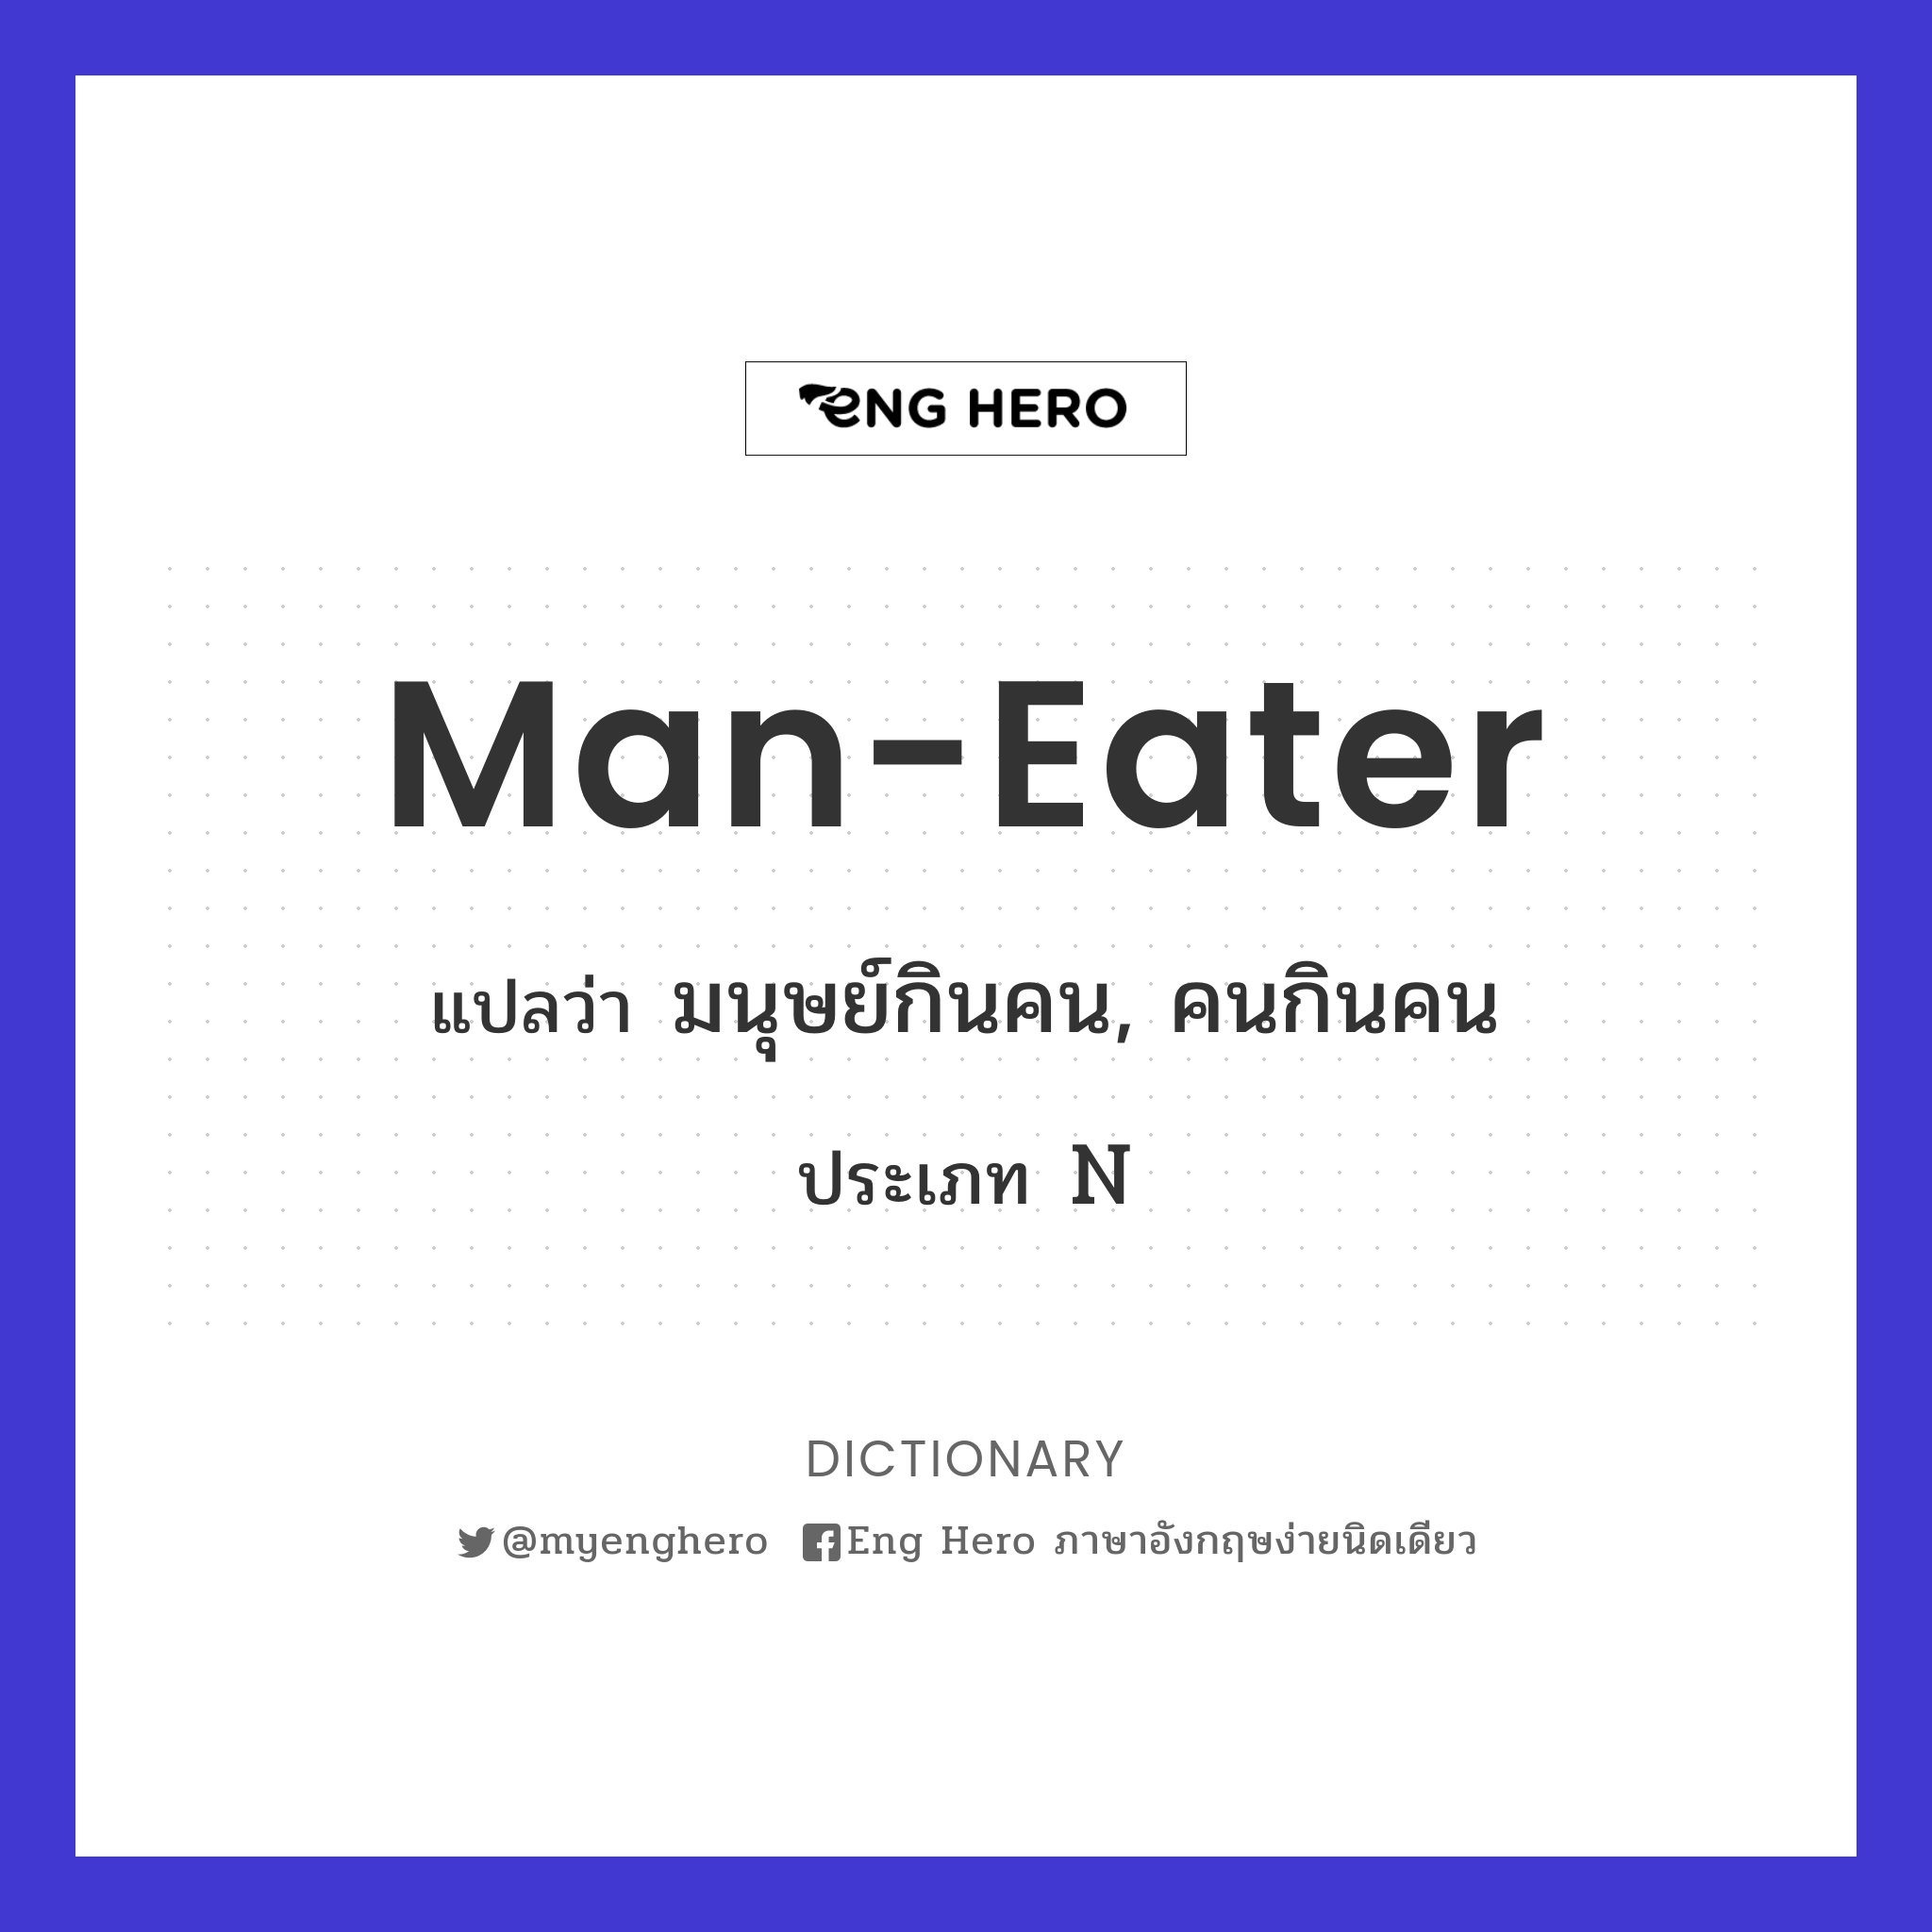 man-eater